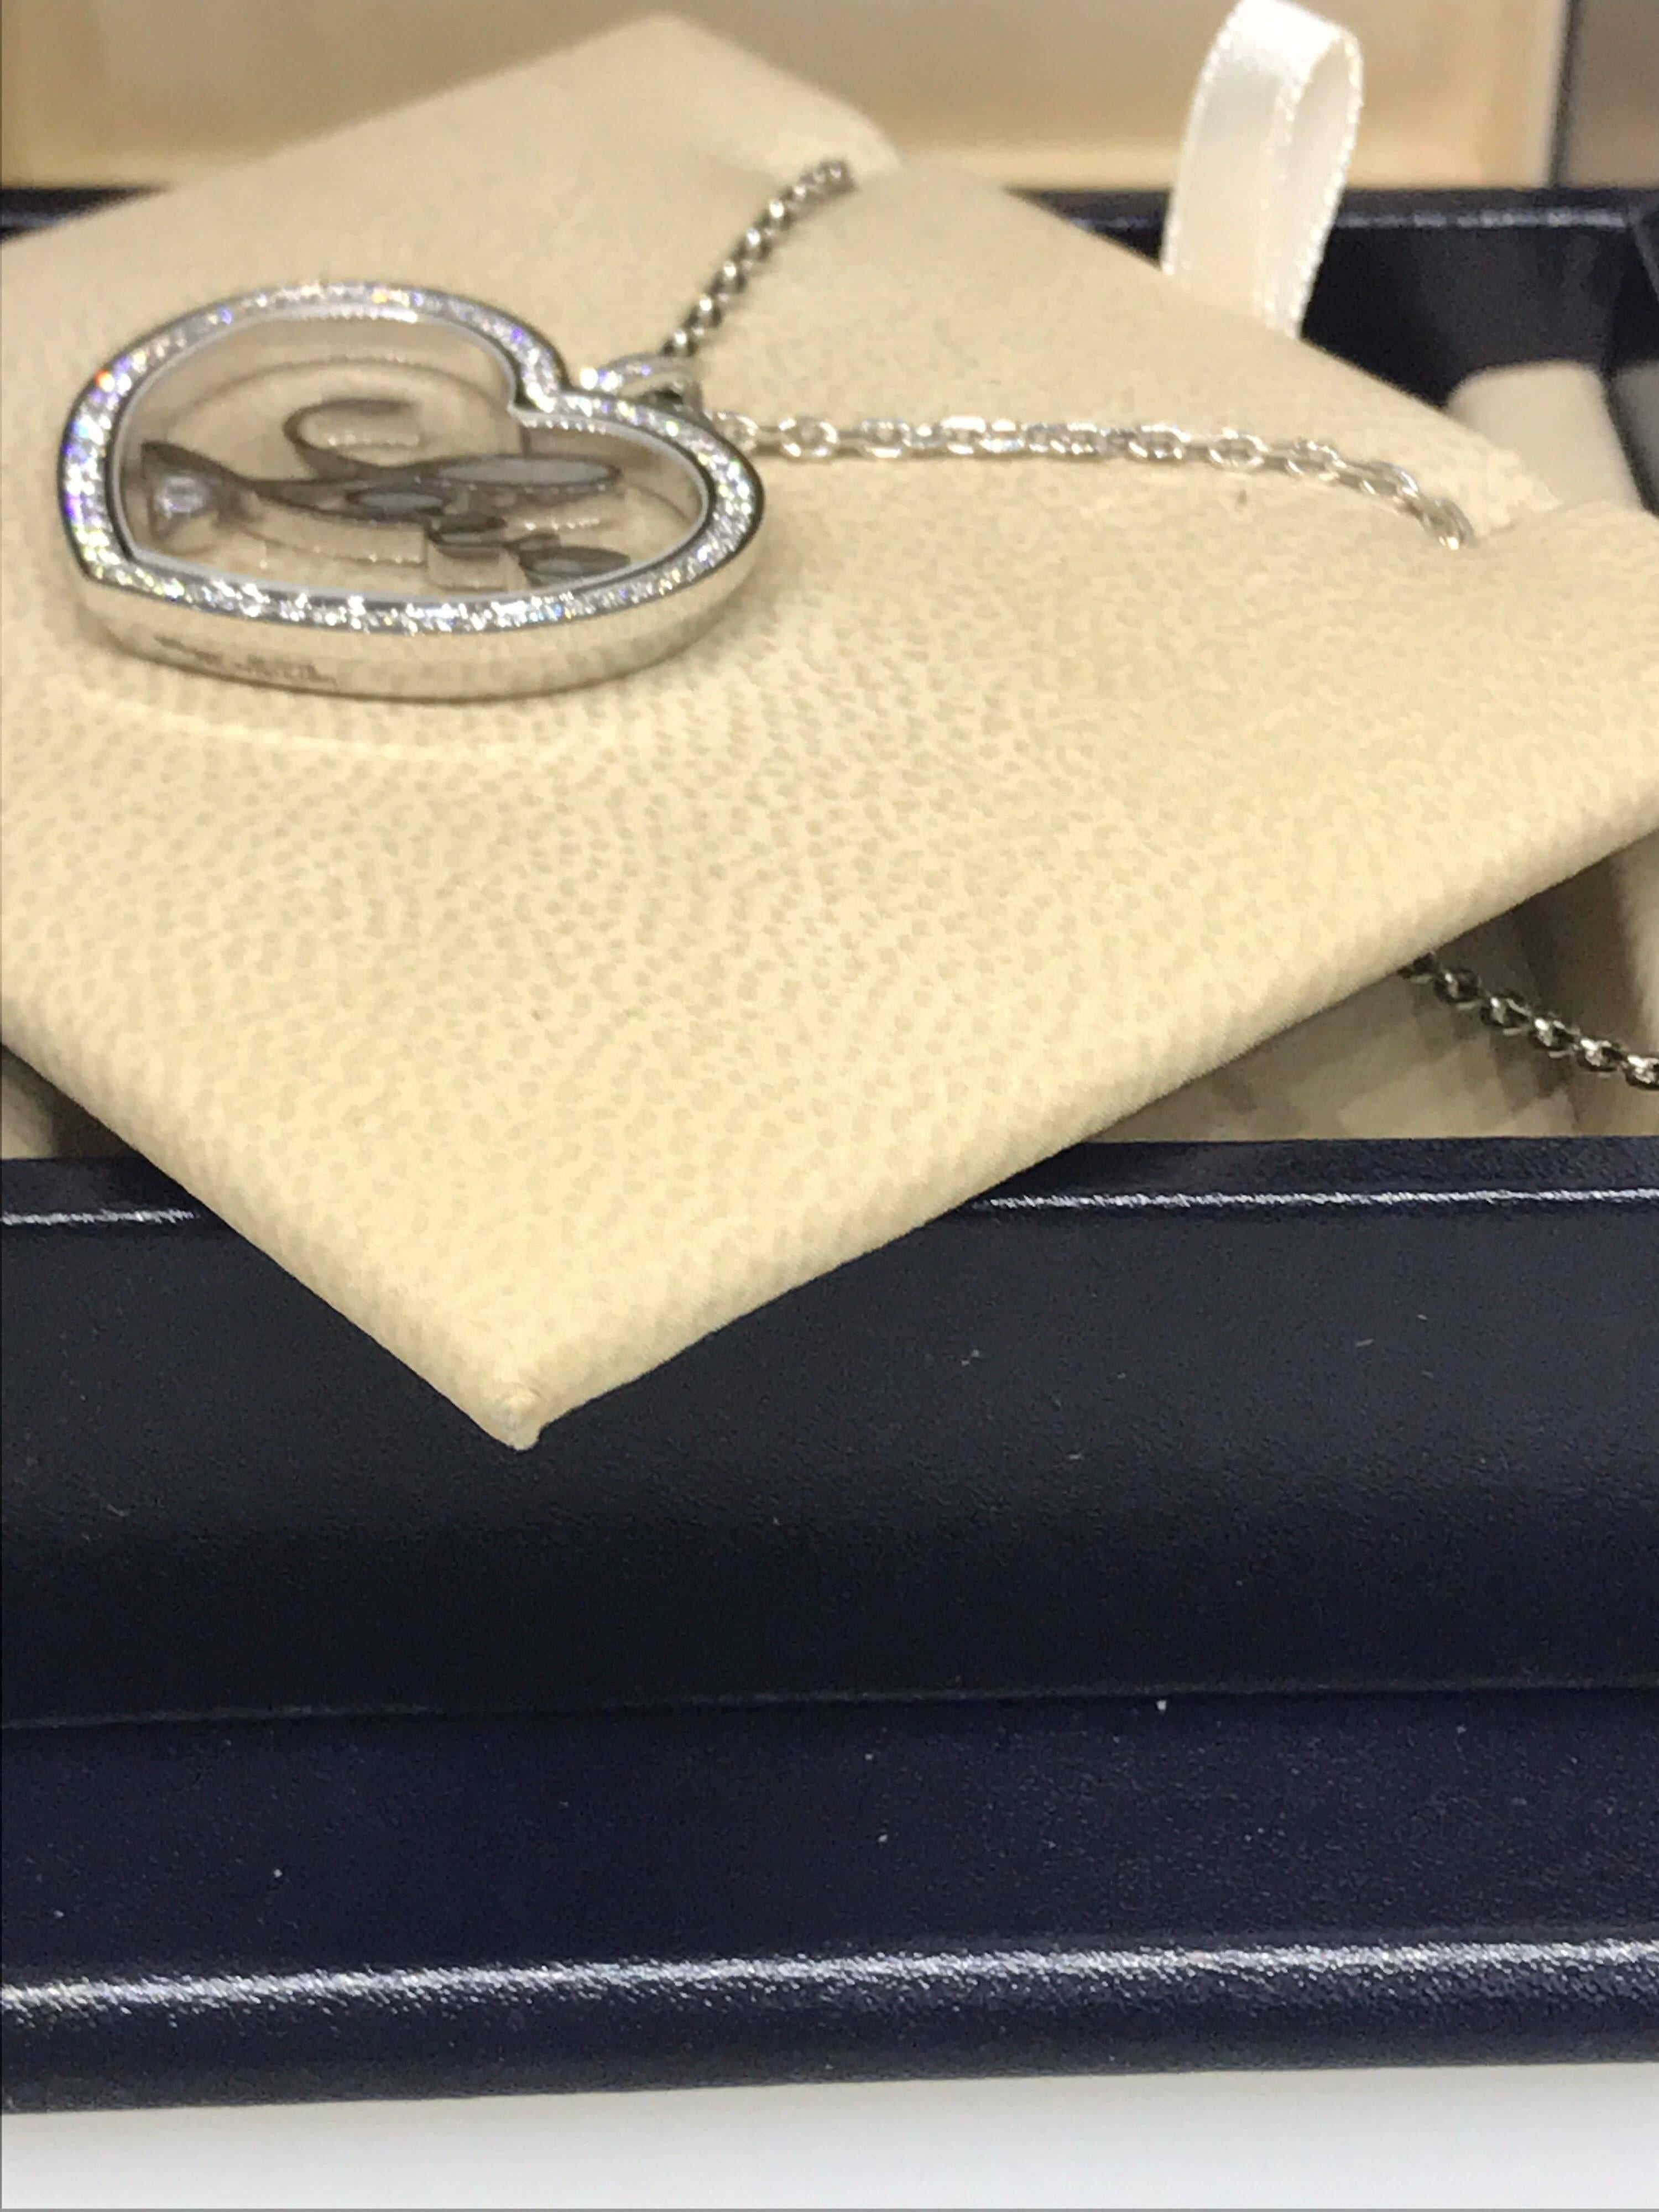 chopard love heart necklace